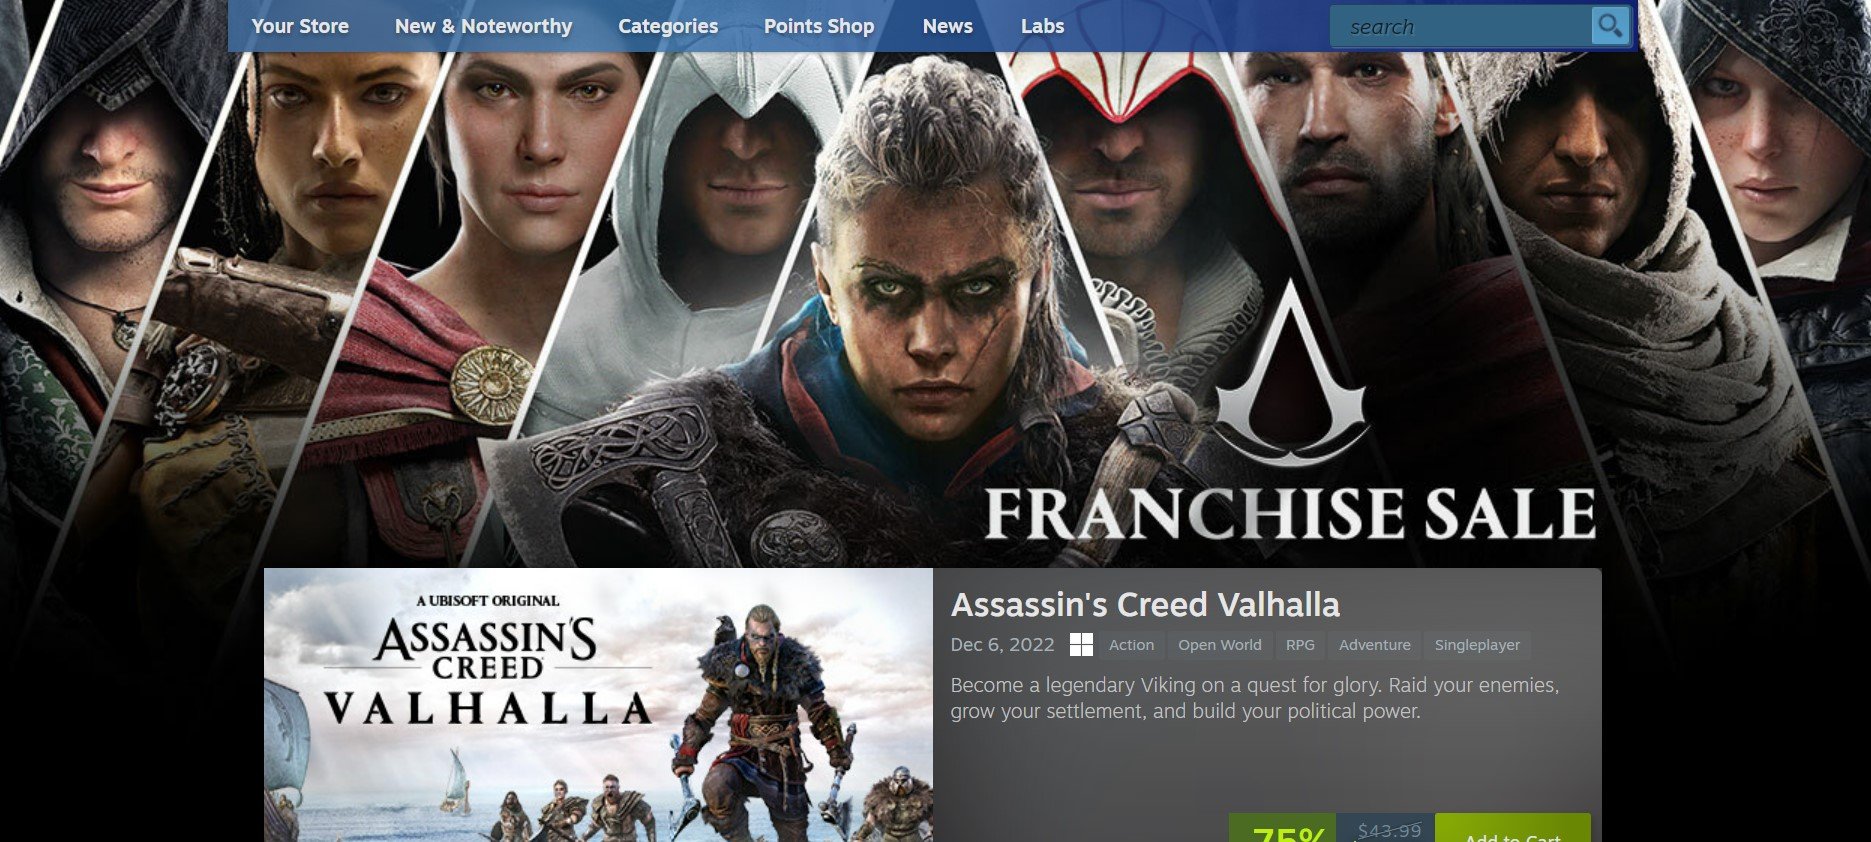 Assassins Creed sale on Steam